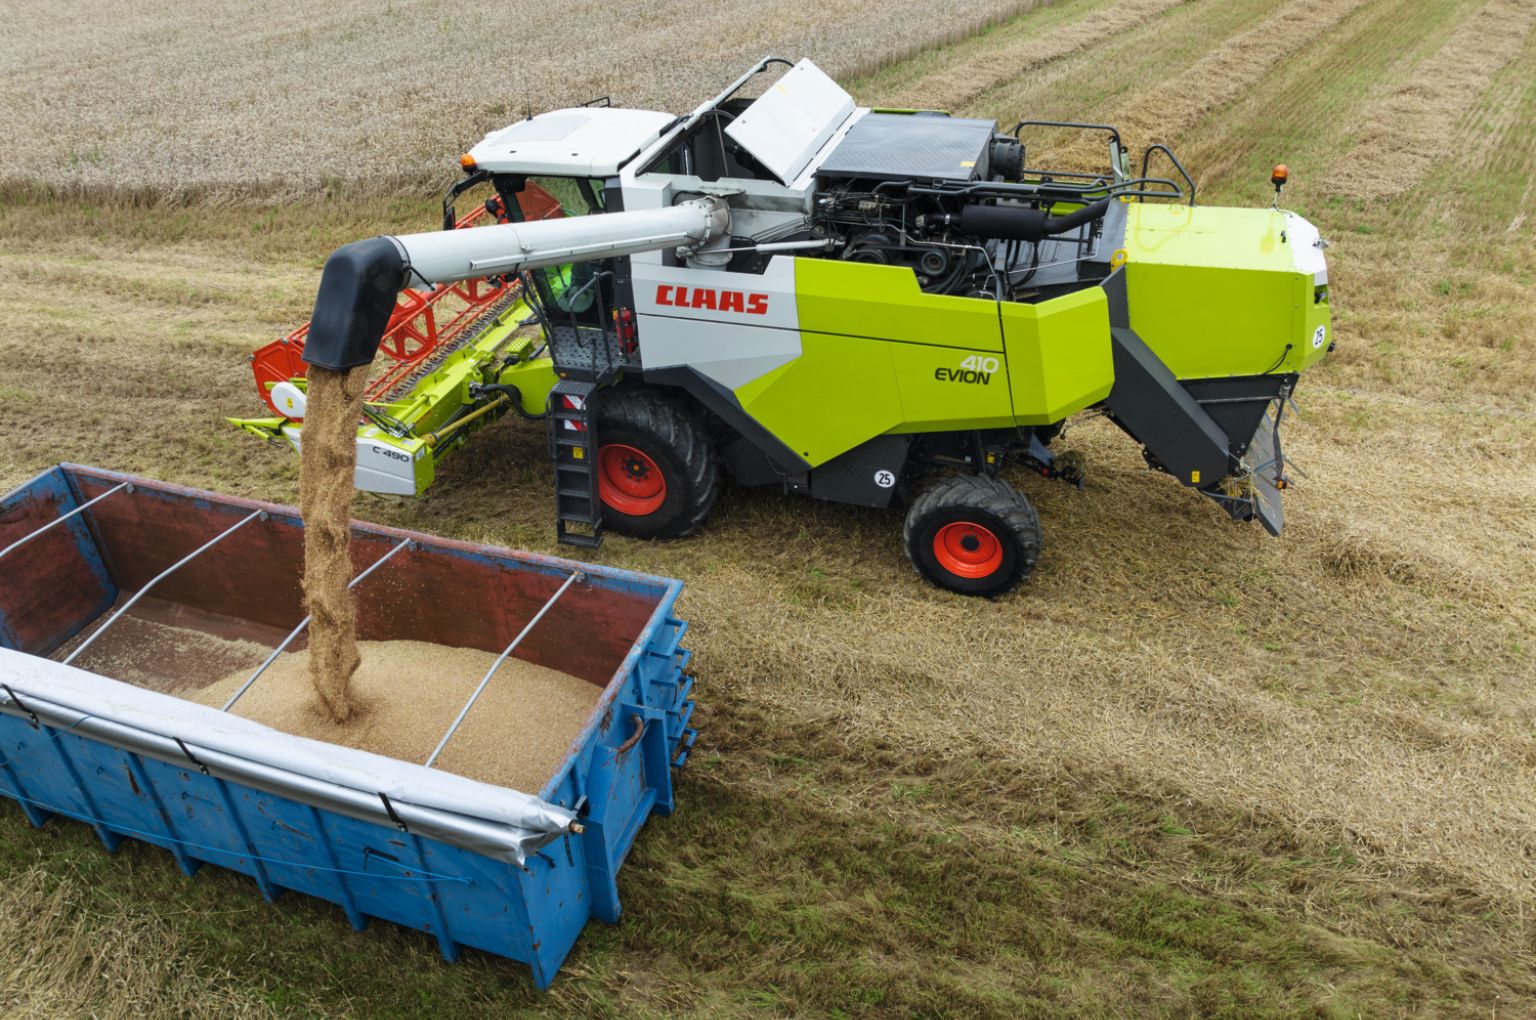 Claas launches Evion lo spec straw walker combine harvester